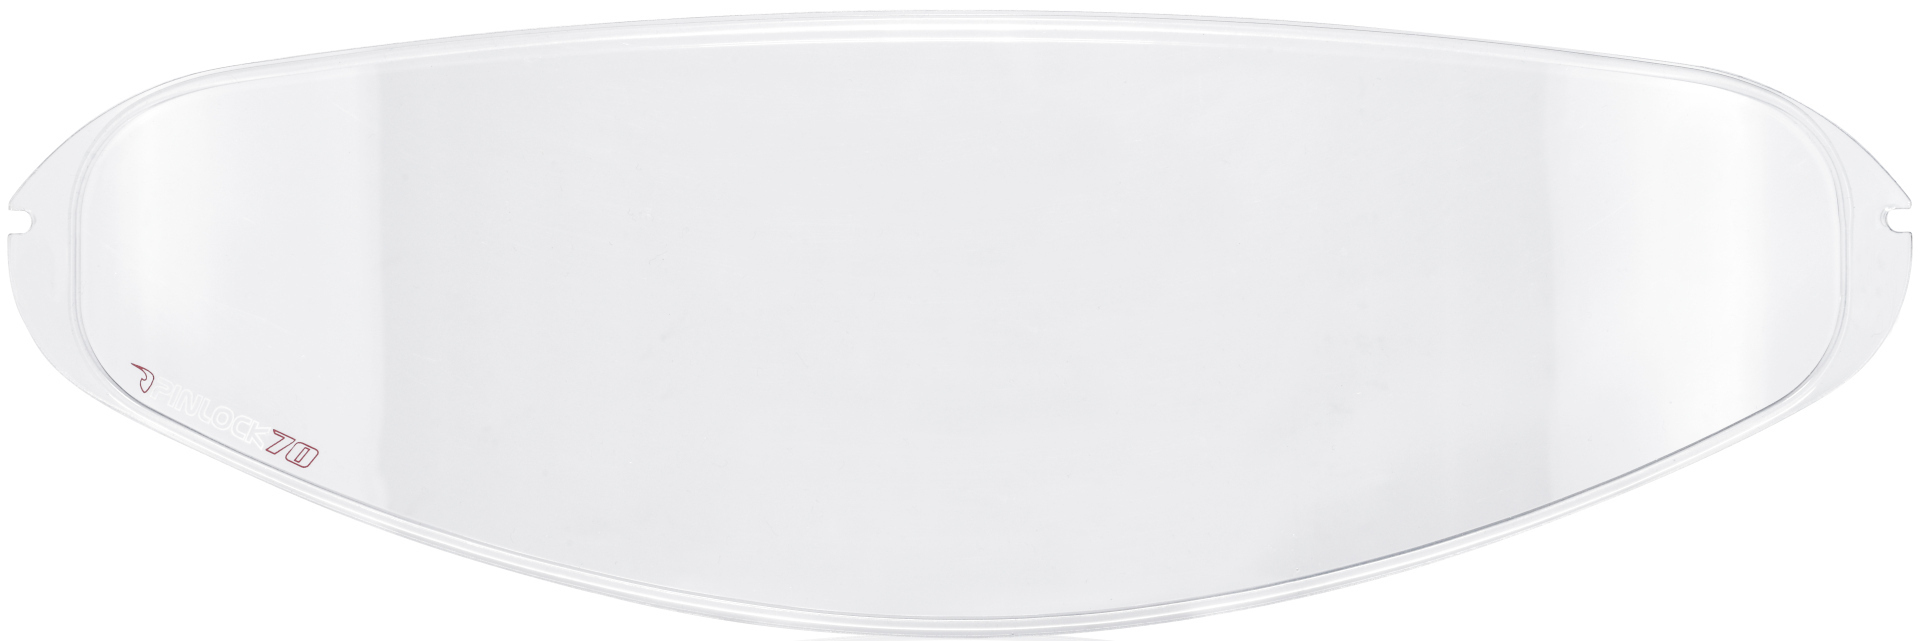 Acerbis Transparent Pinlock Lens, clear, clear, Size One Size